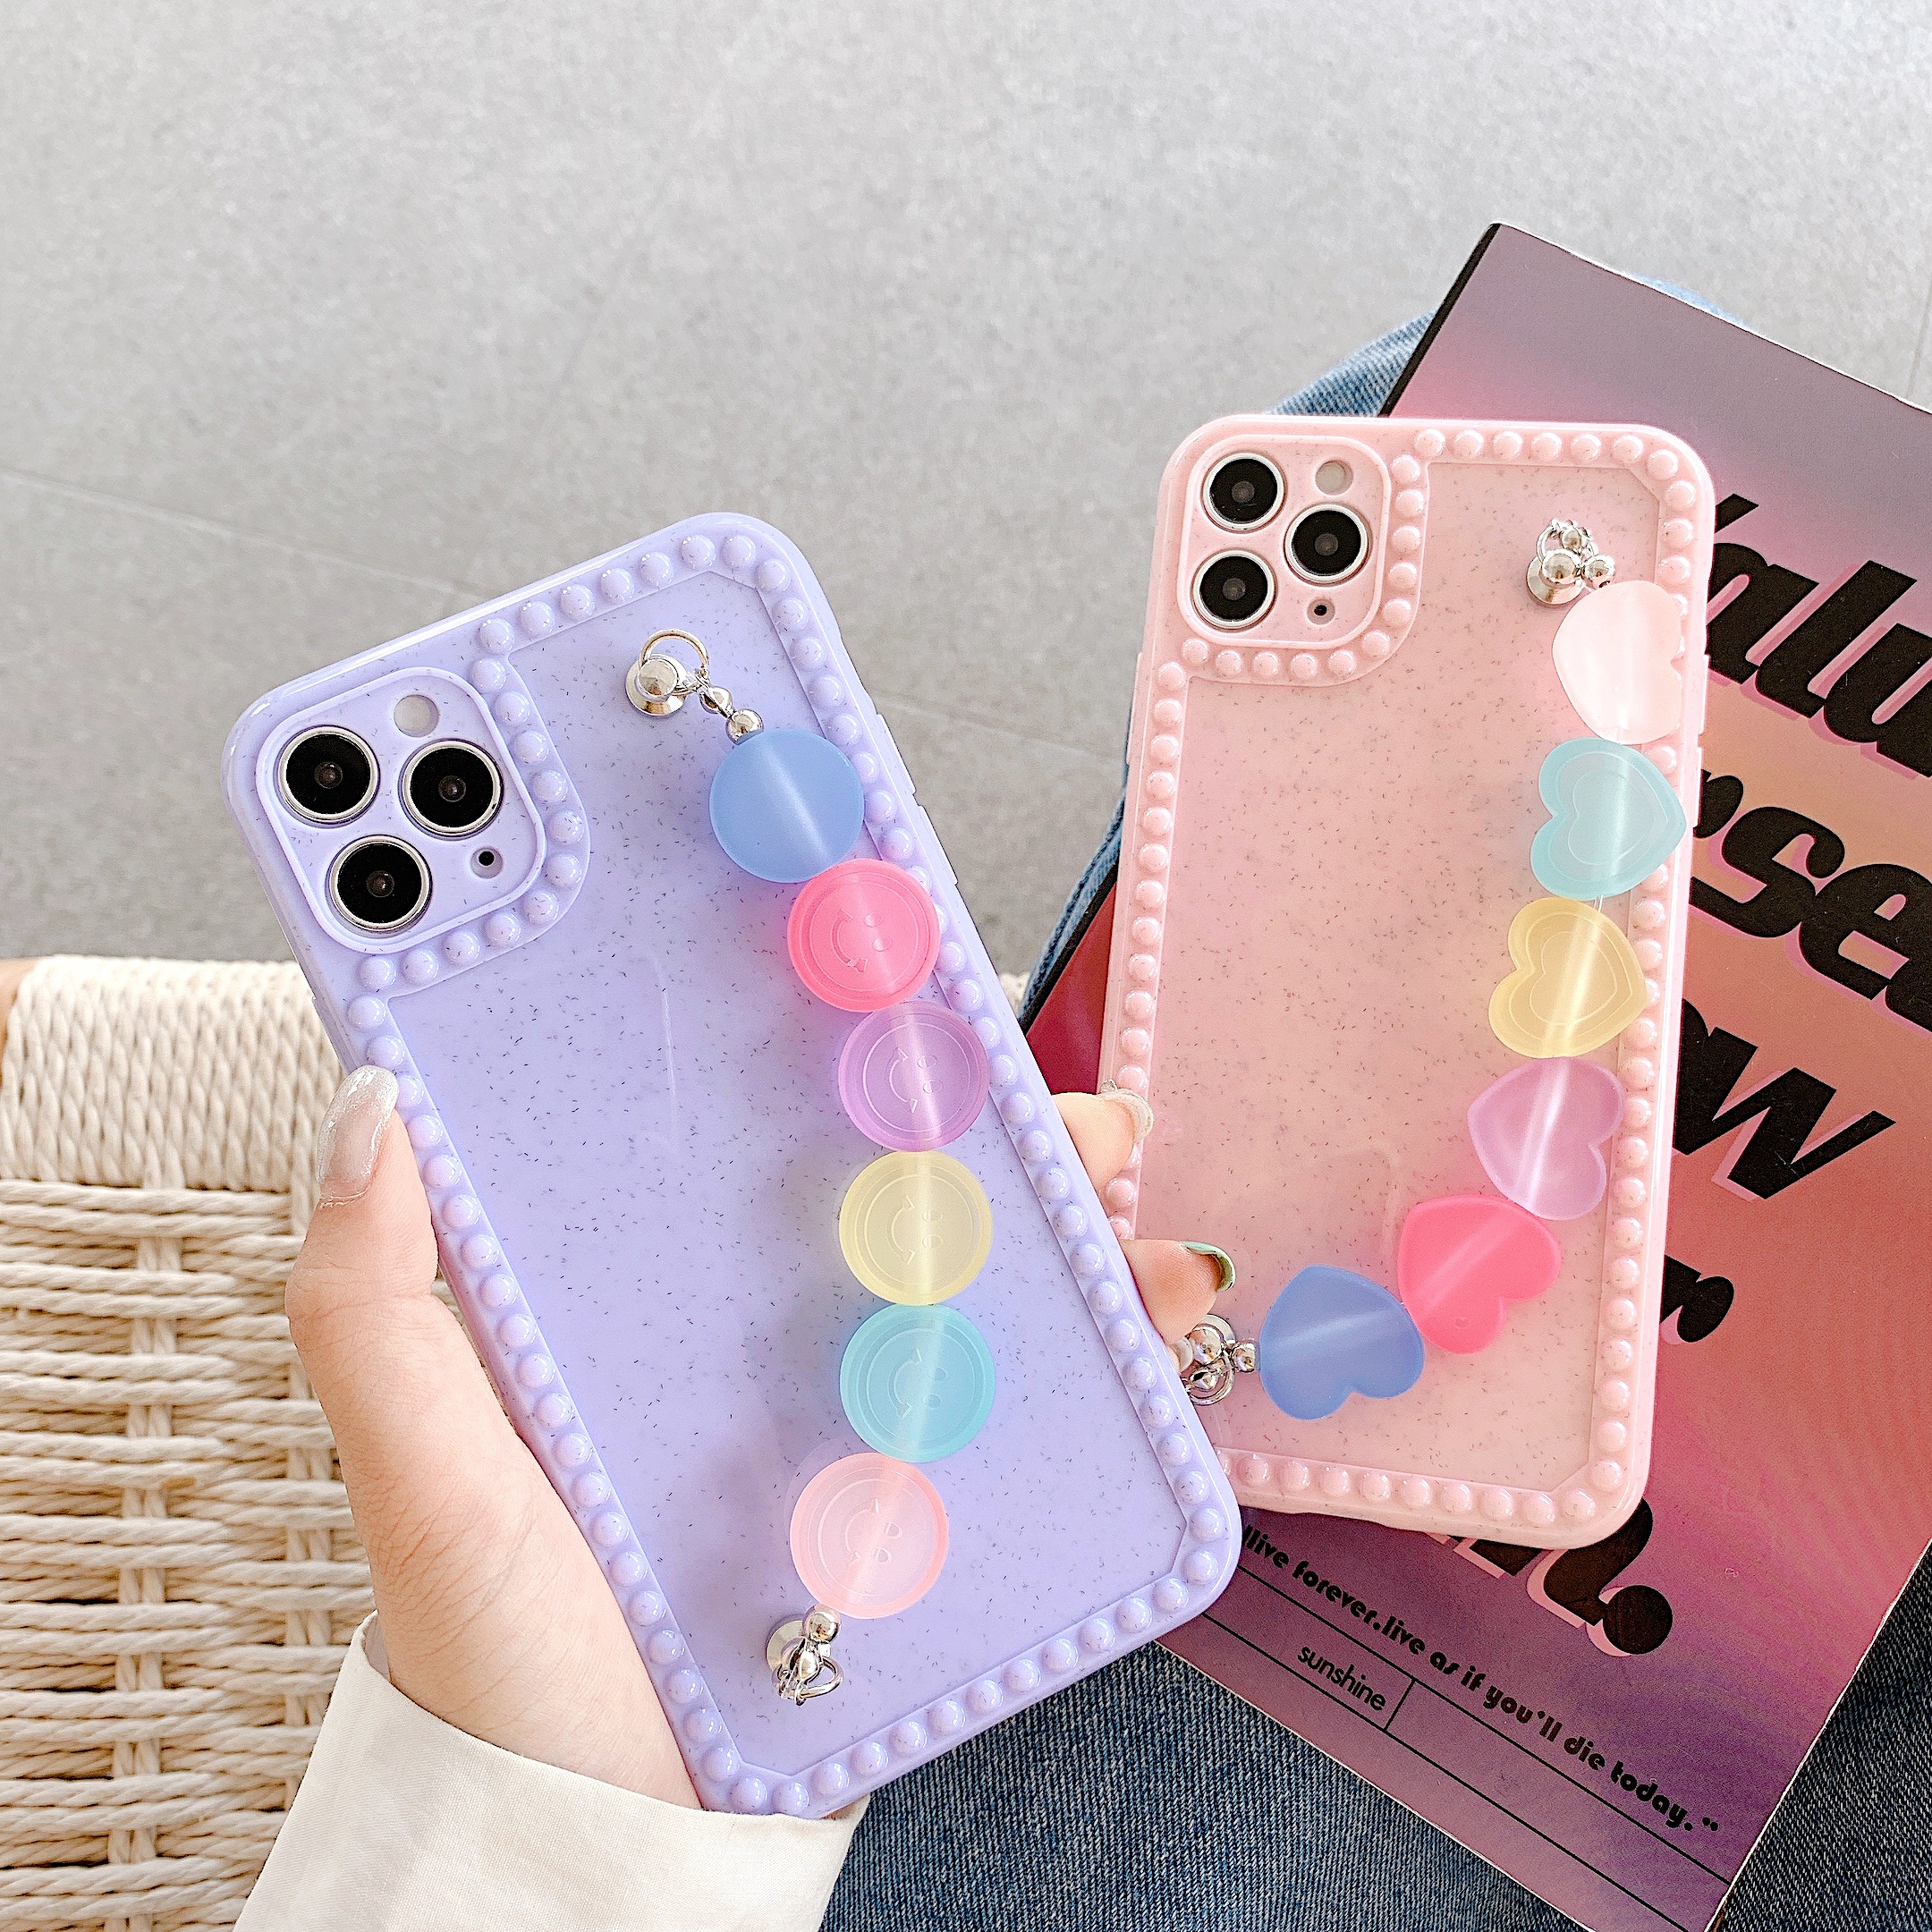 Fresh Korea Cute Candy Color Love heart Bracelet Phone case for iphone X XR XS 11 12mini pro MAX 7 8 plus back soft cover fundas